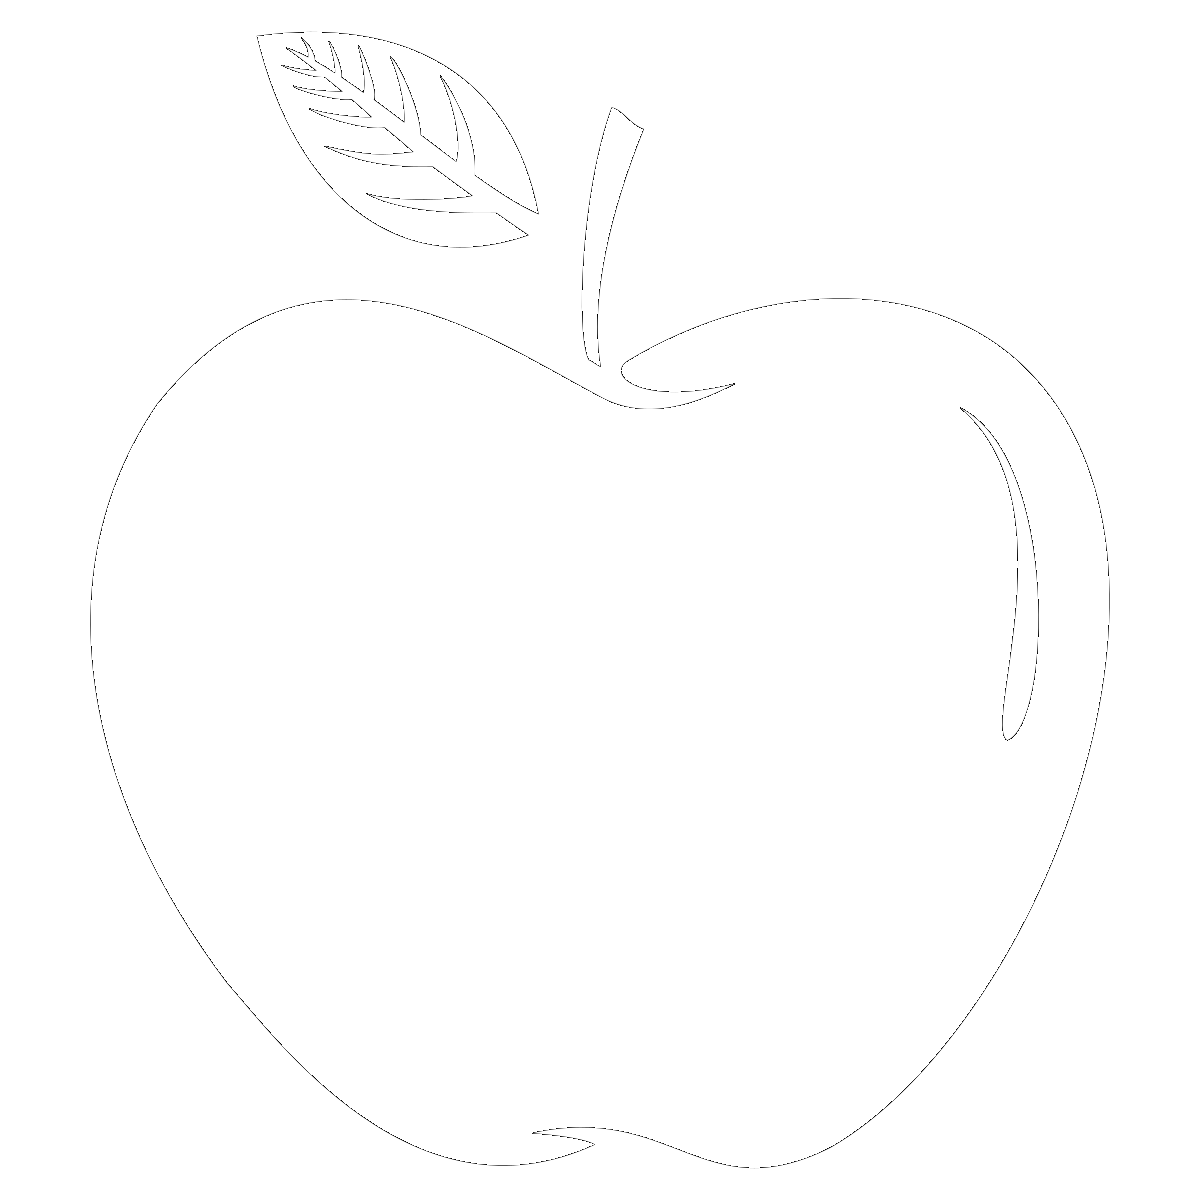 Symbol The Apple/Tree